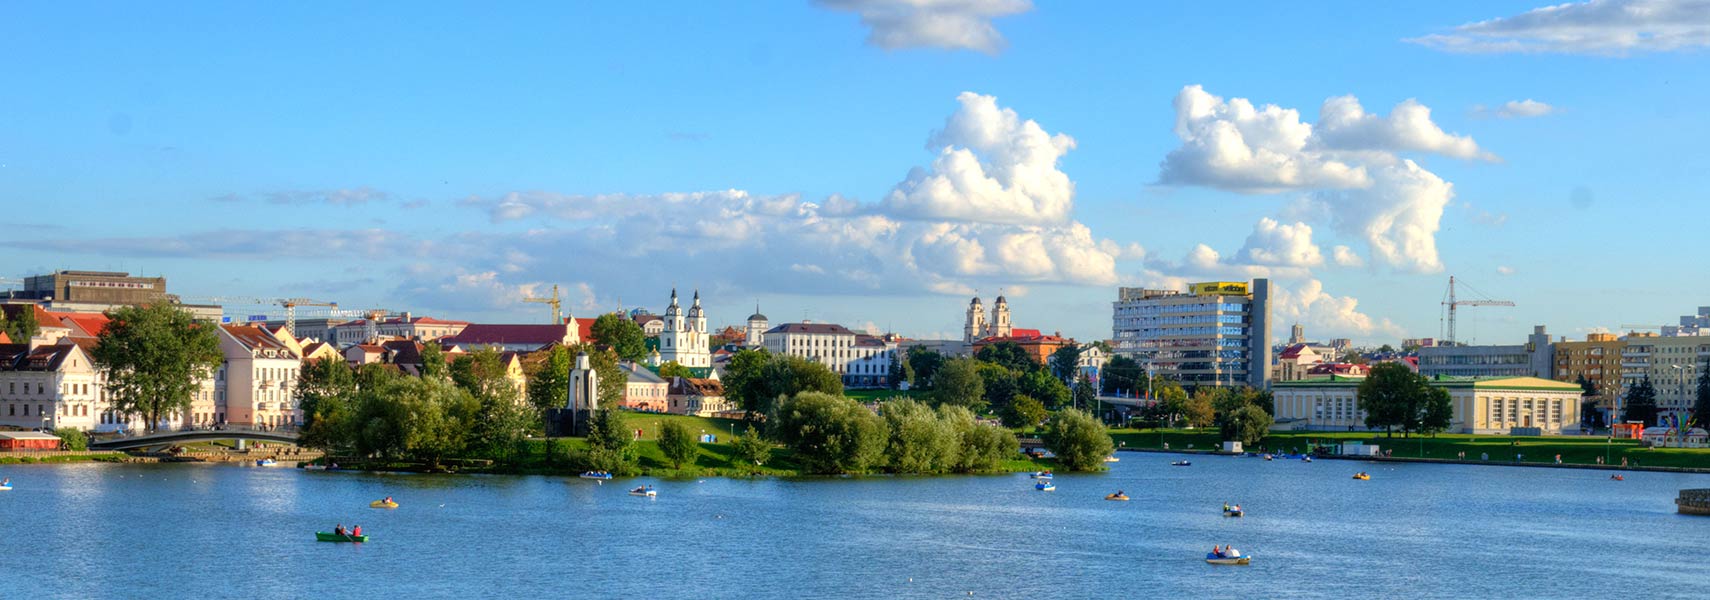 Minsk at Svislach River